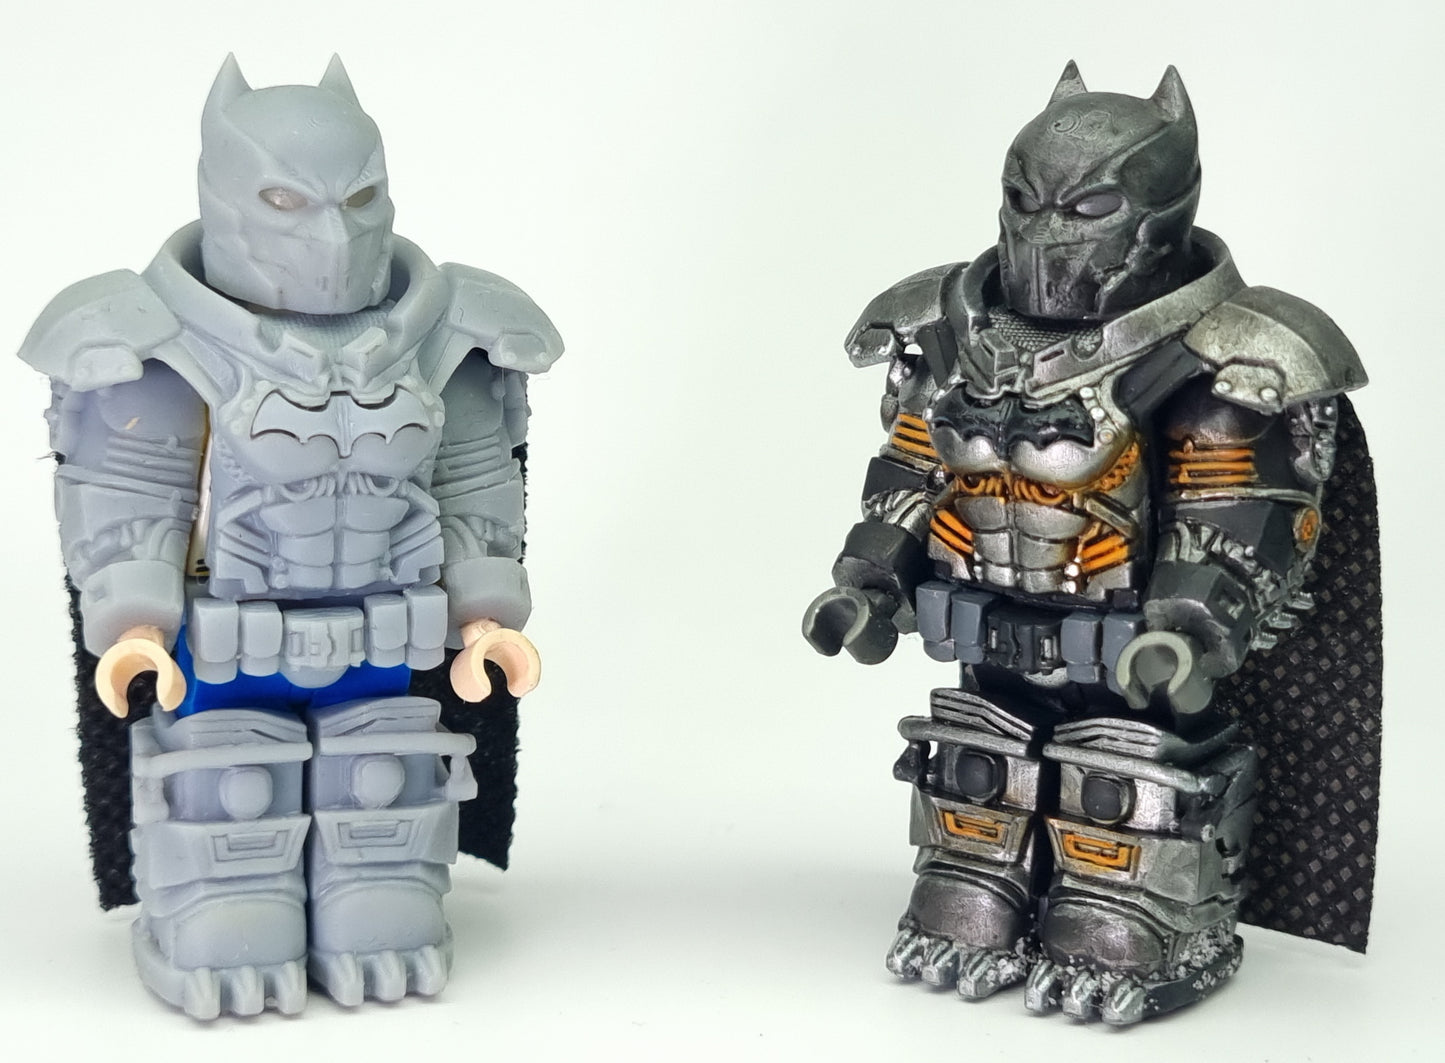 Building toy custom 3D printed snow armor XE by miniheropolis!